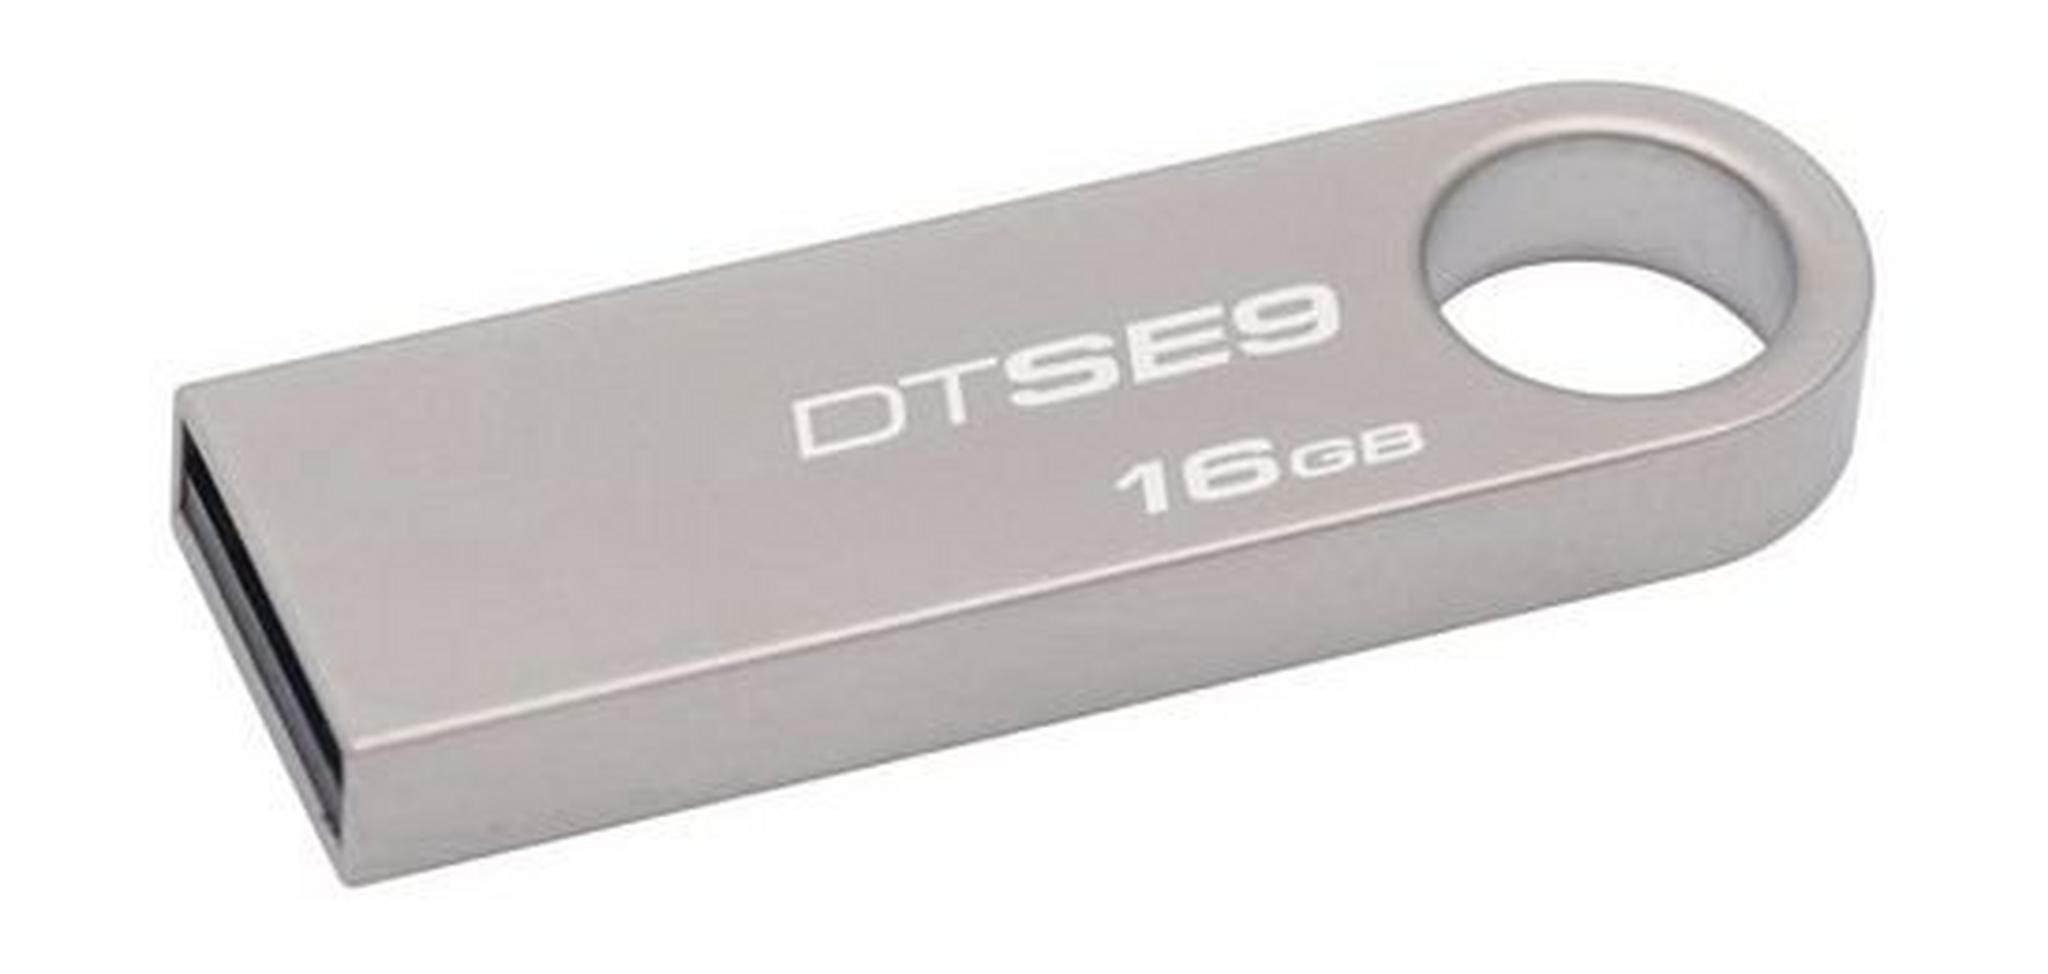 KINGSTON Digital DataTraveler SE9 16GB USB 2.0 Flash Drive - Grey